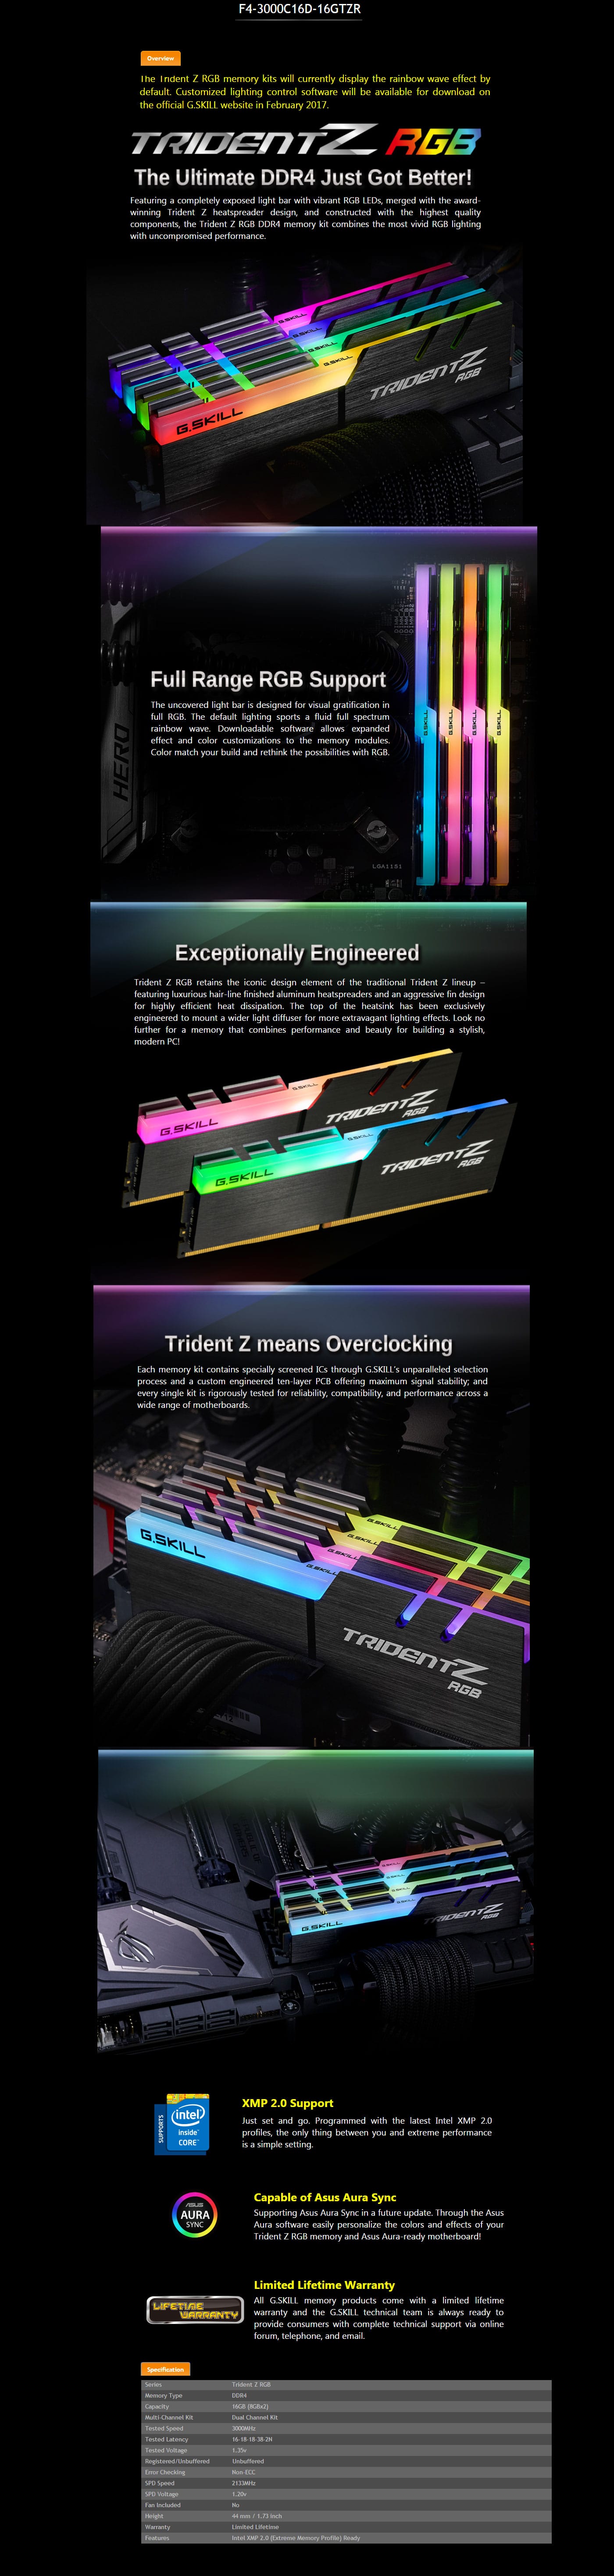 G.skill Trident Z RGB 16GB (2 x 8GB) DDR4 3000MHz Desktop RAM features